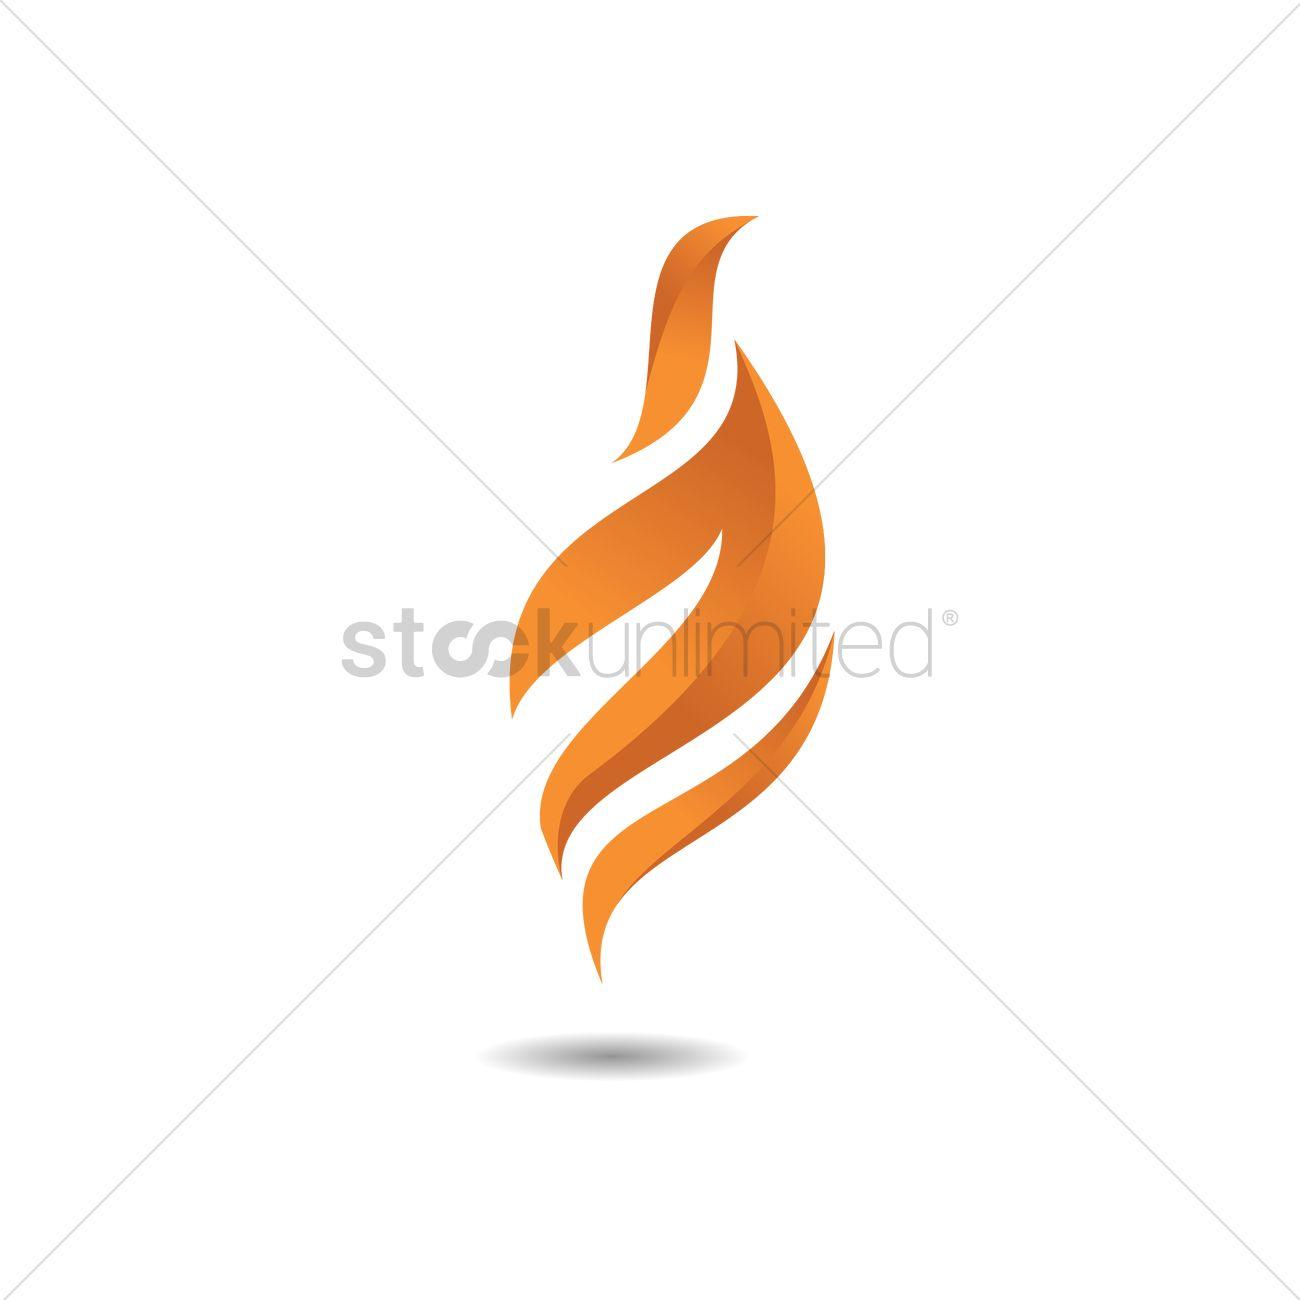 Orange Flame Logo - Flame logo design Vector Image - 1477196 | StockUnlimited